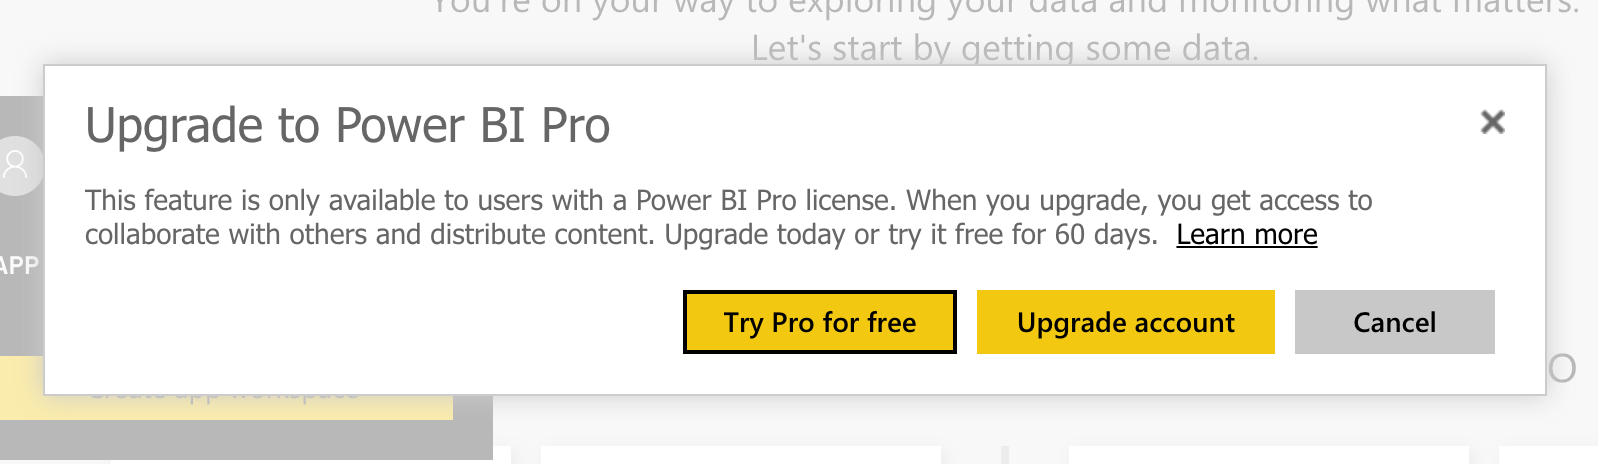 02_power_bi_try_pro_free